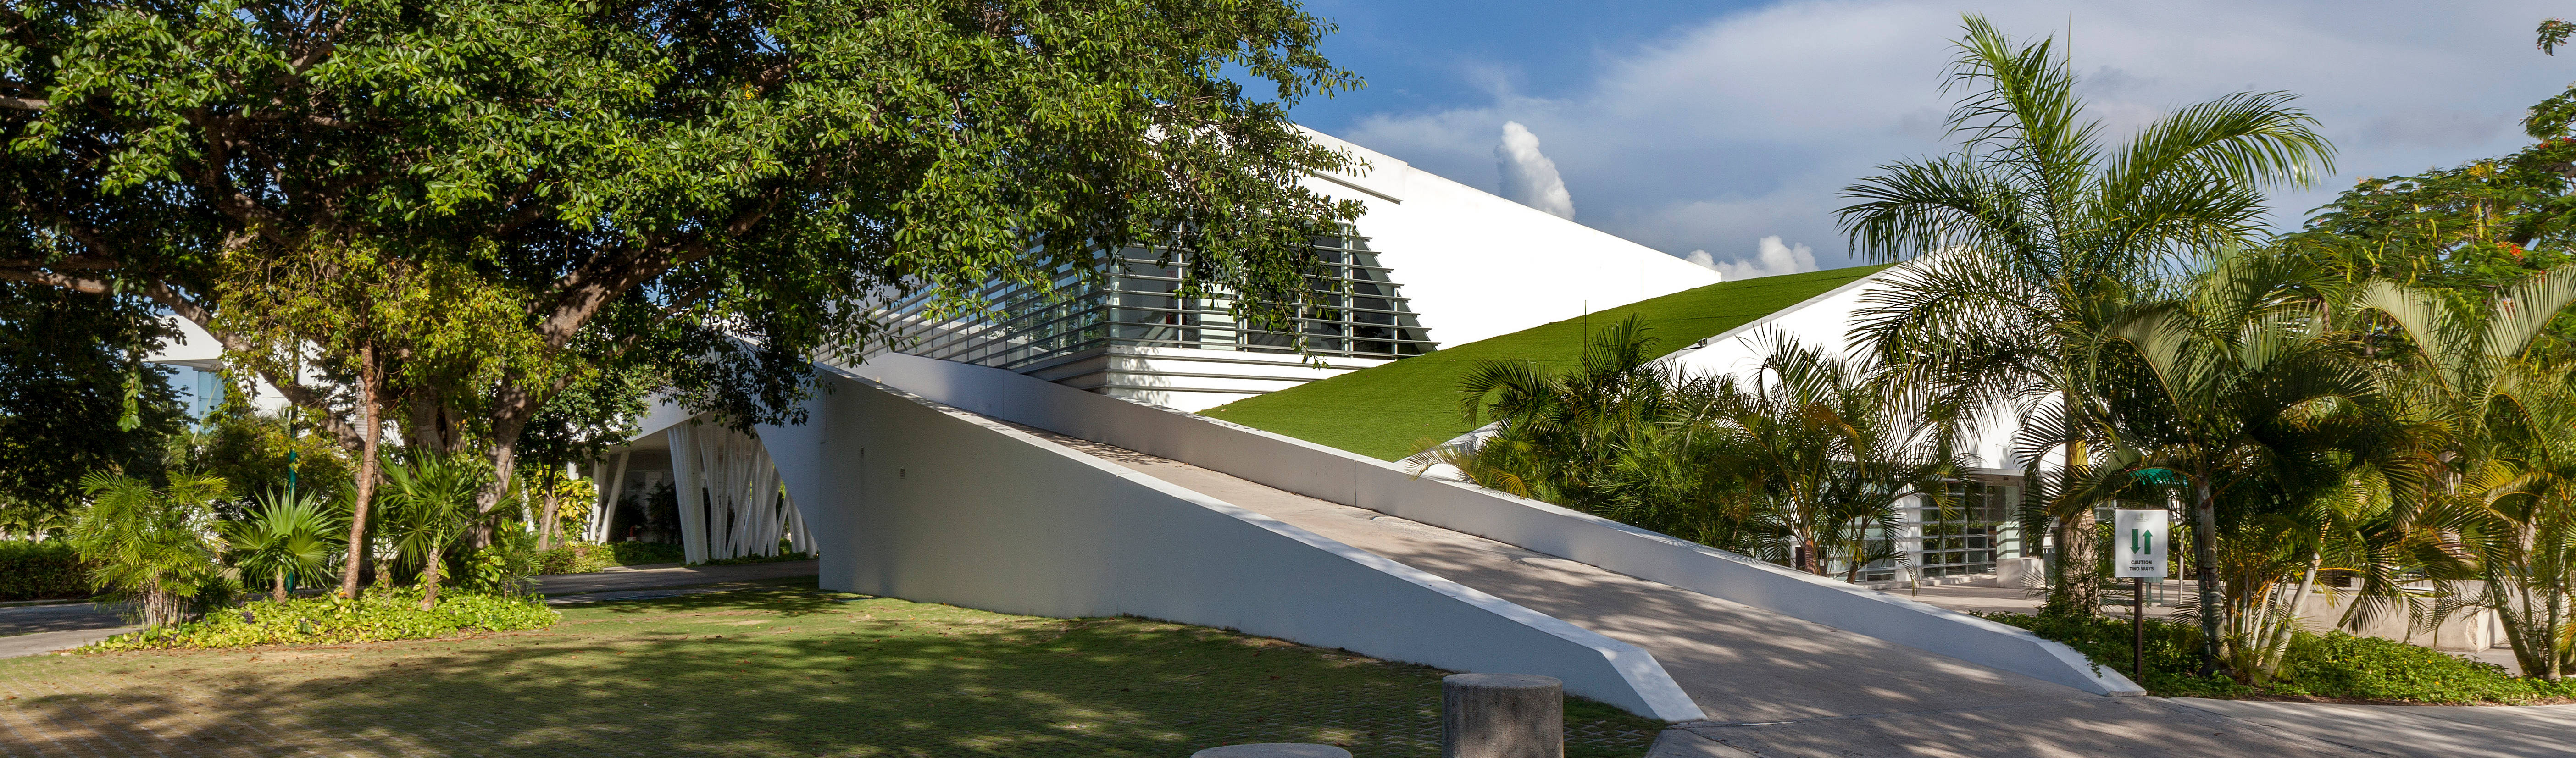 Daniel Cota Arquitectura | Despacho de arquitectos | Cancún